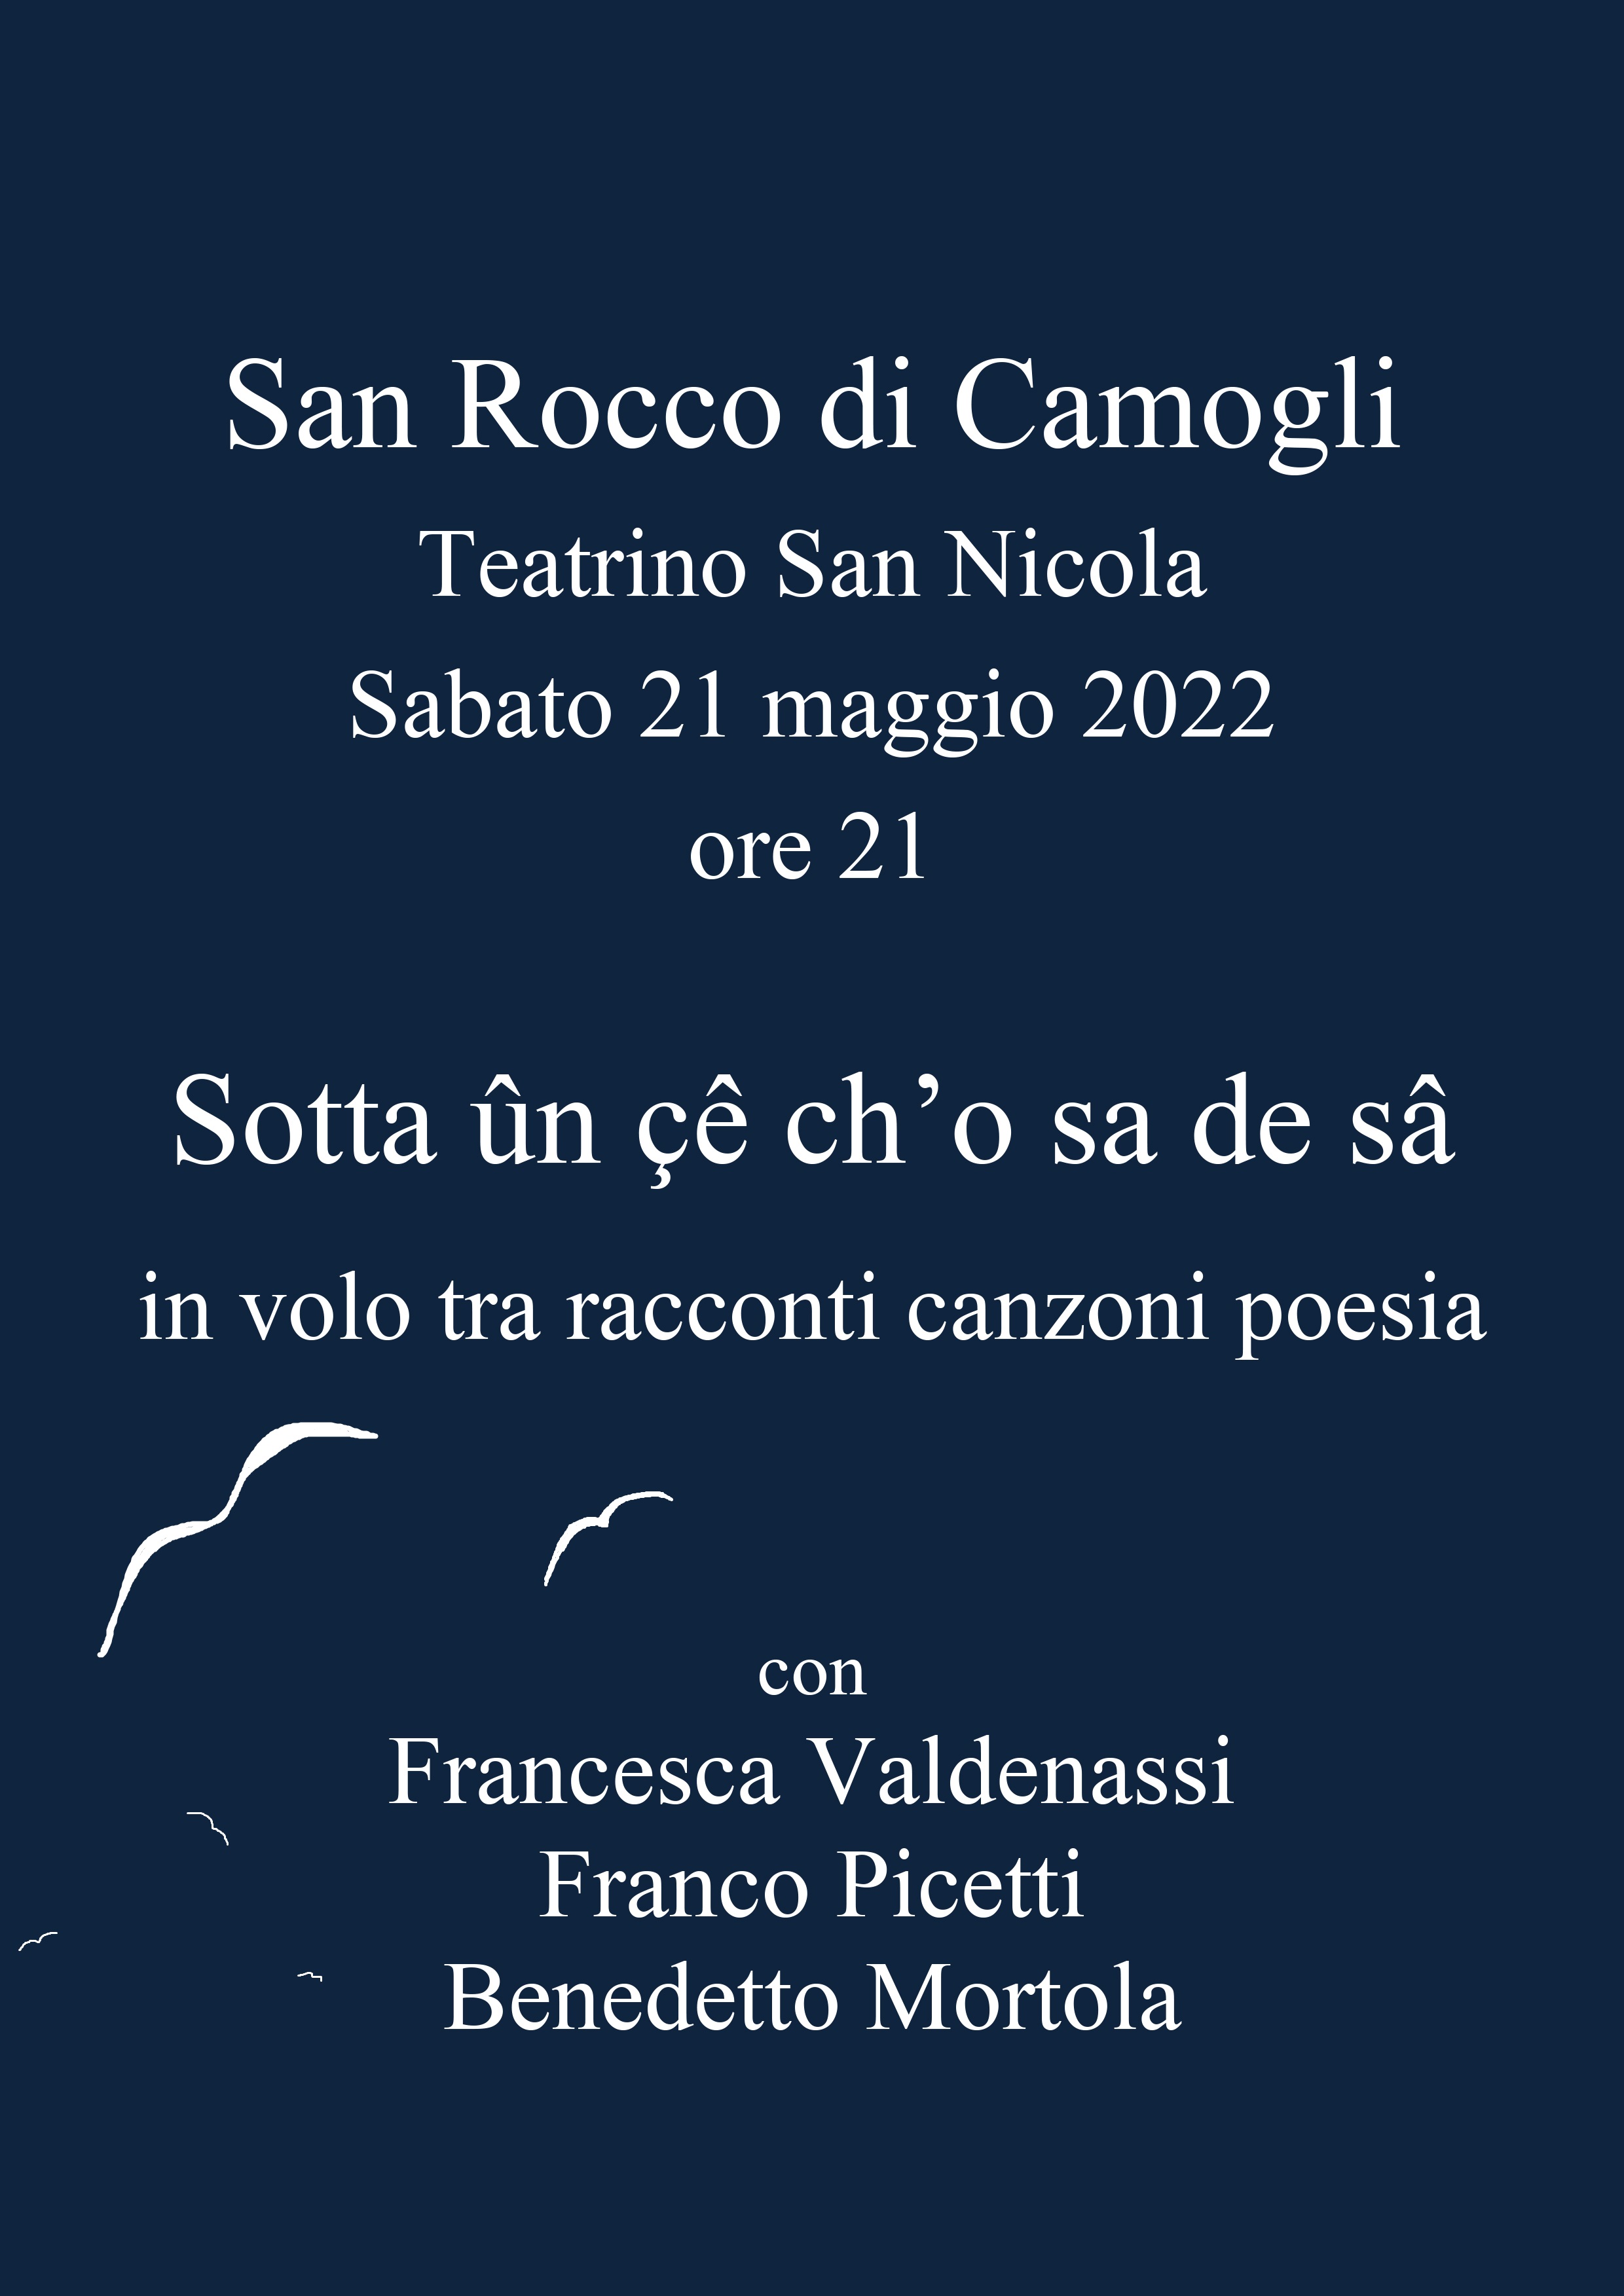 San Rocco locandina blu 1